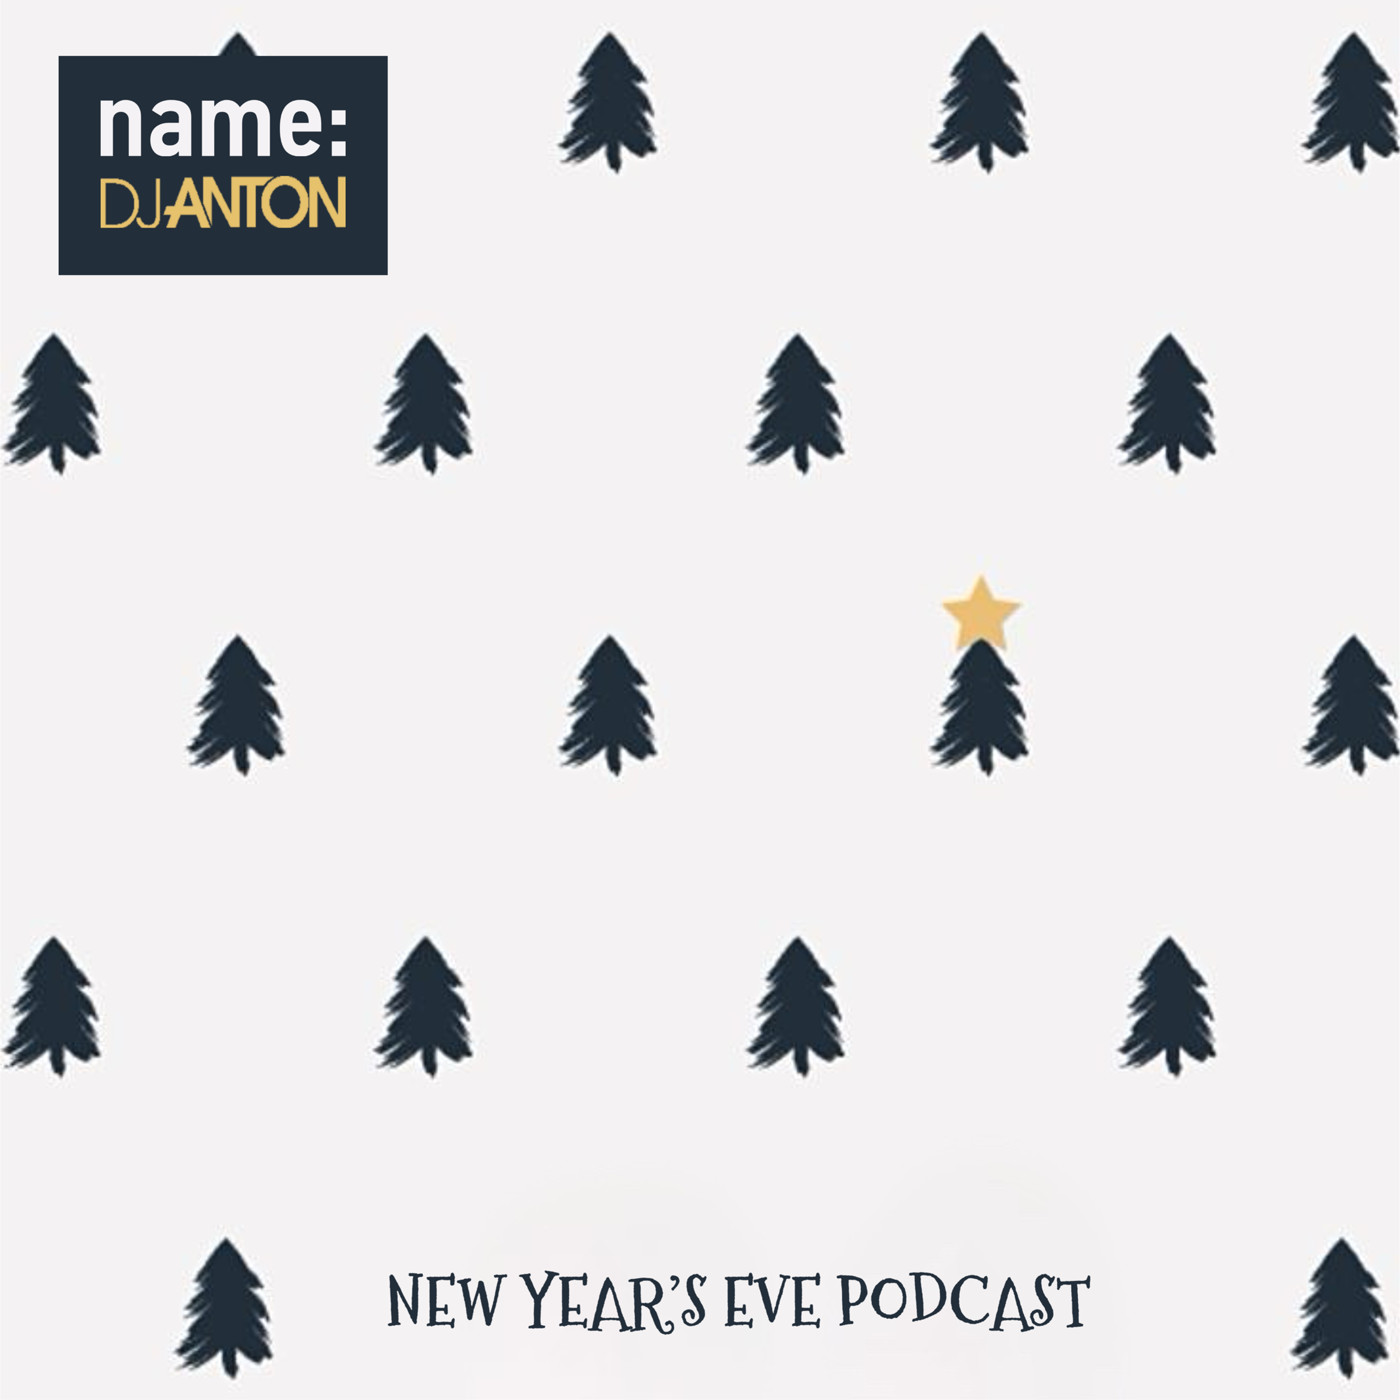 Dj Anton - New Year's Eve Podcast